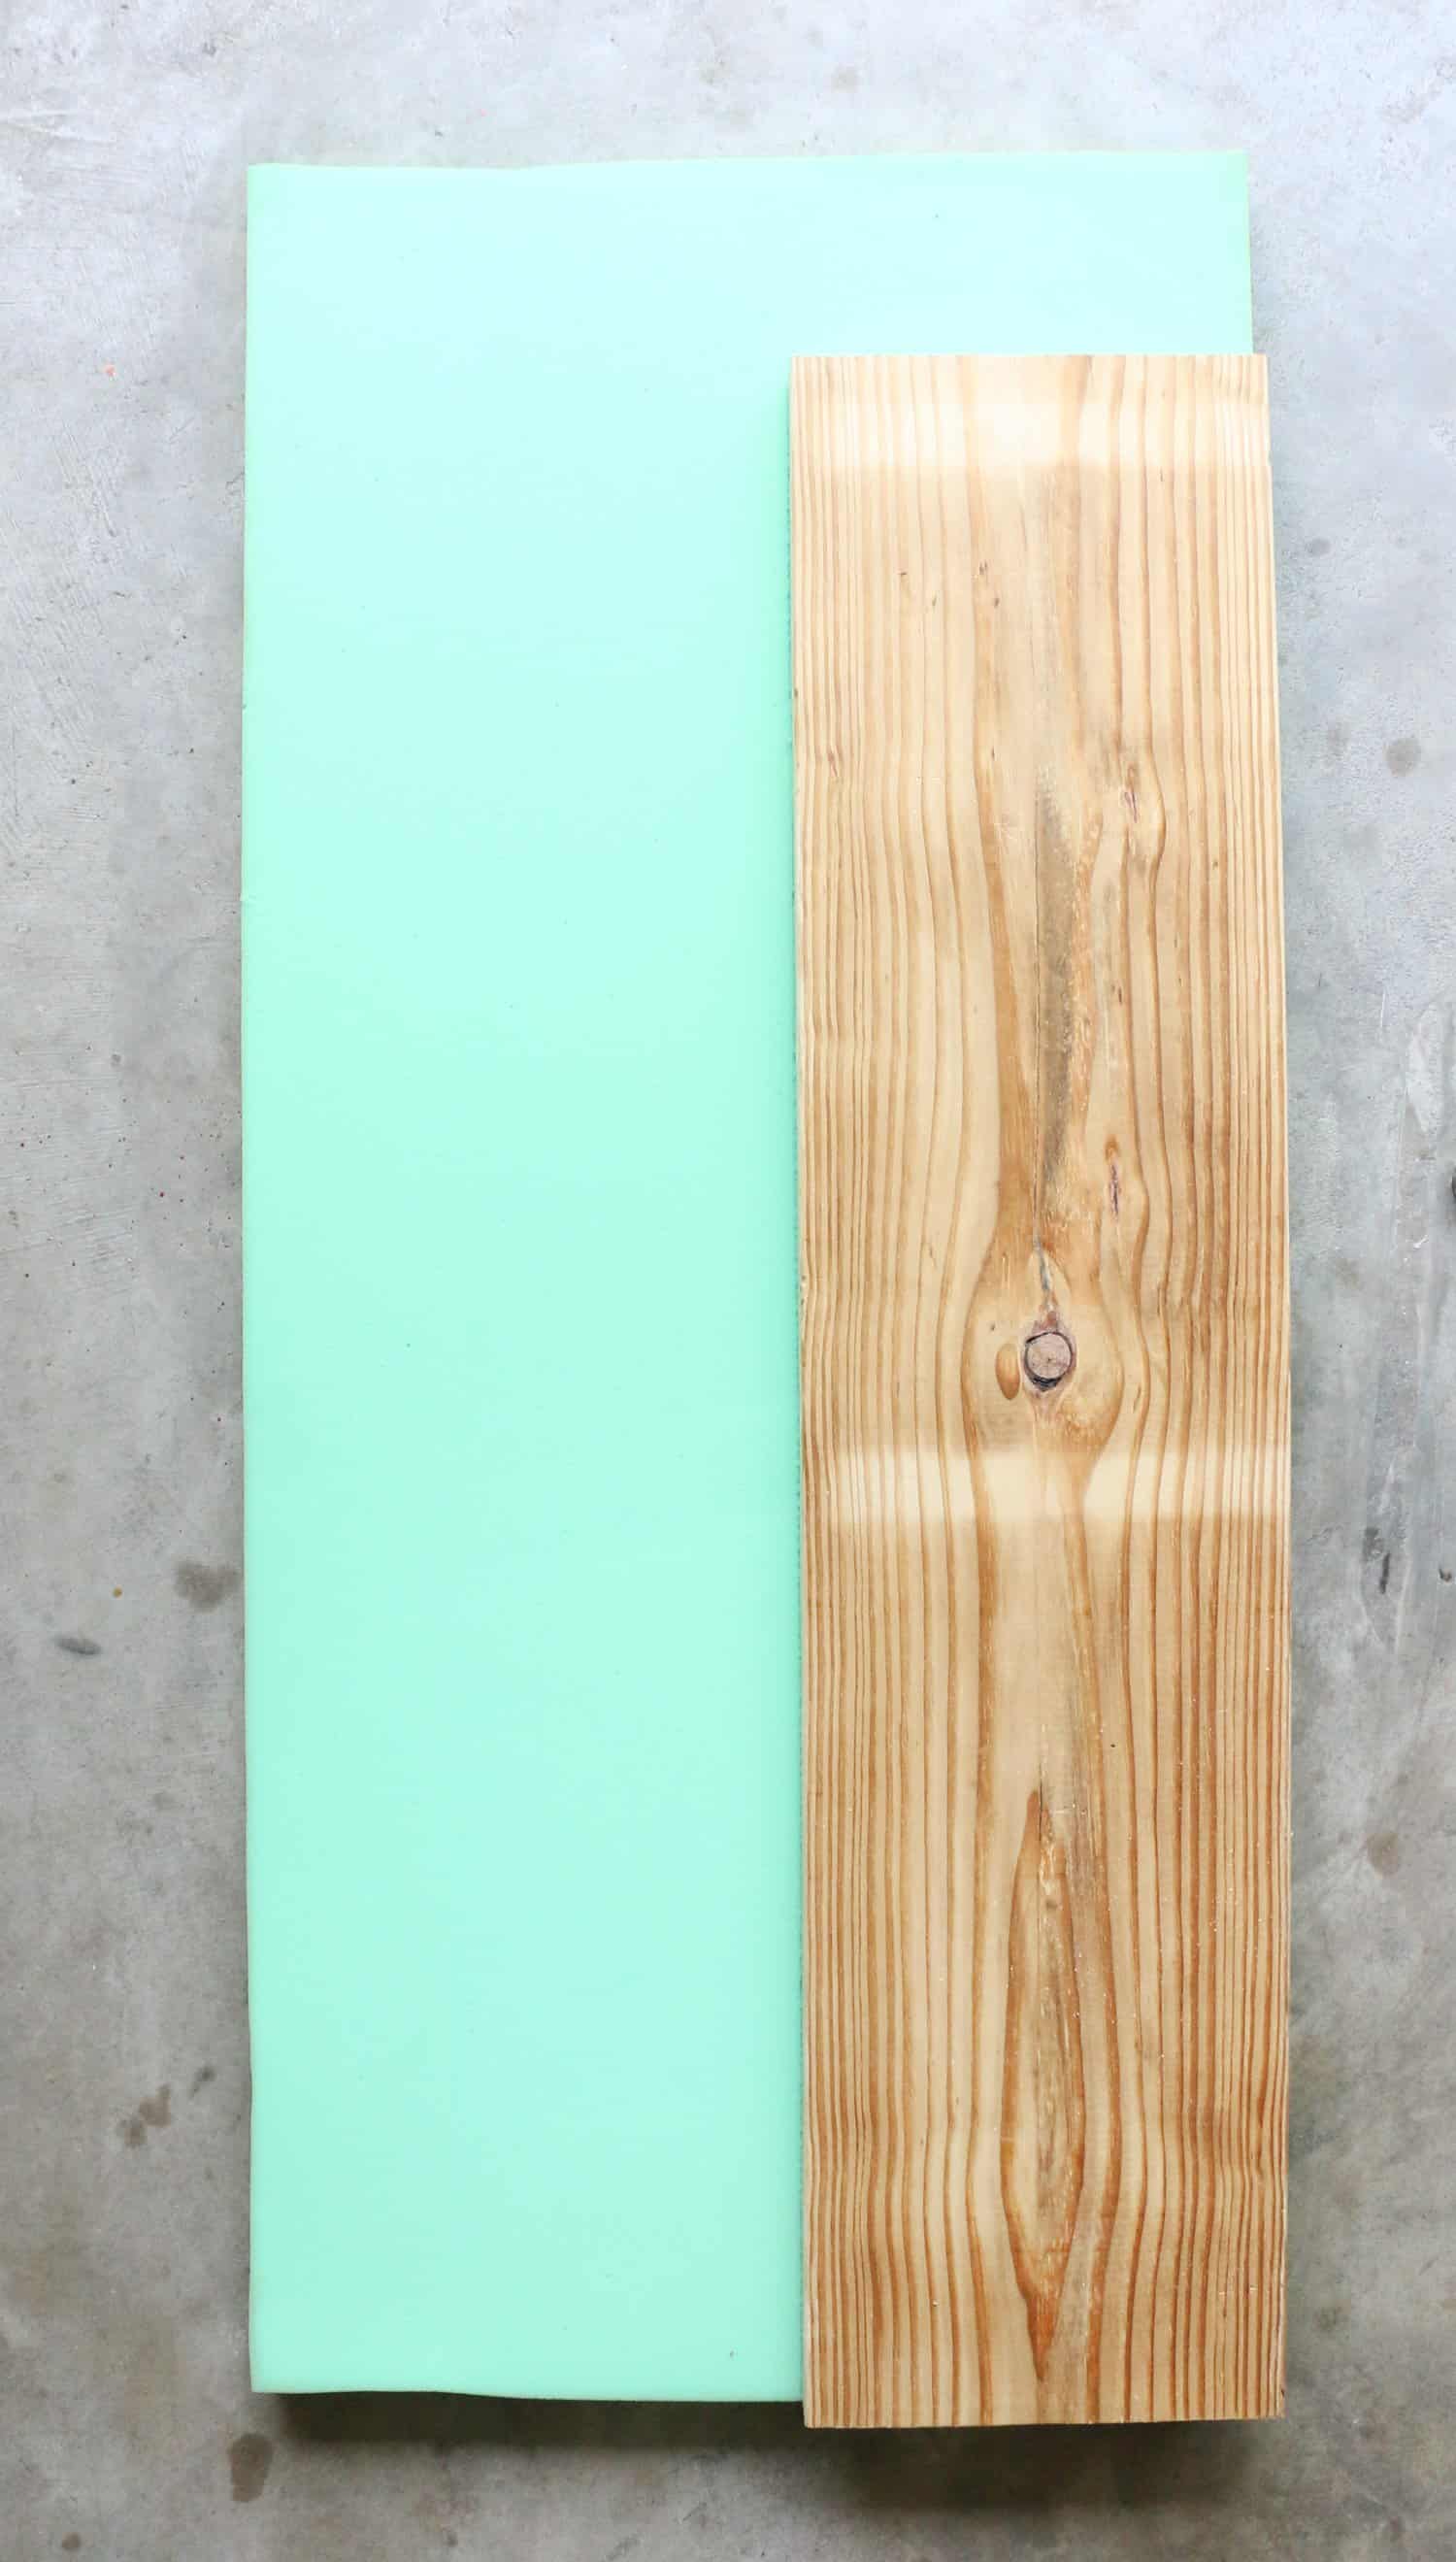 DIY Color Blocked Velvet Bench